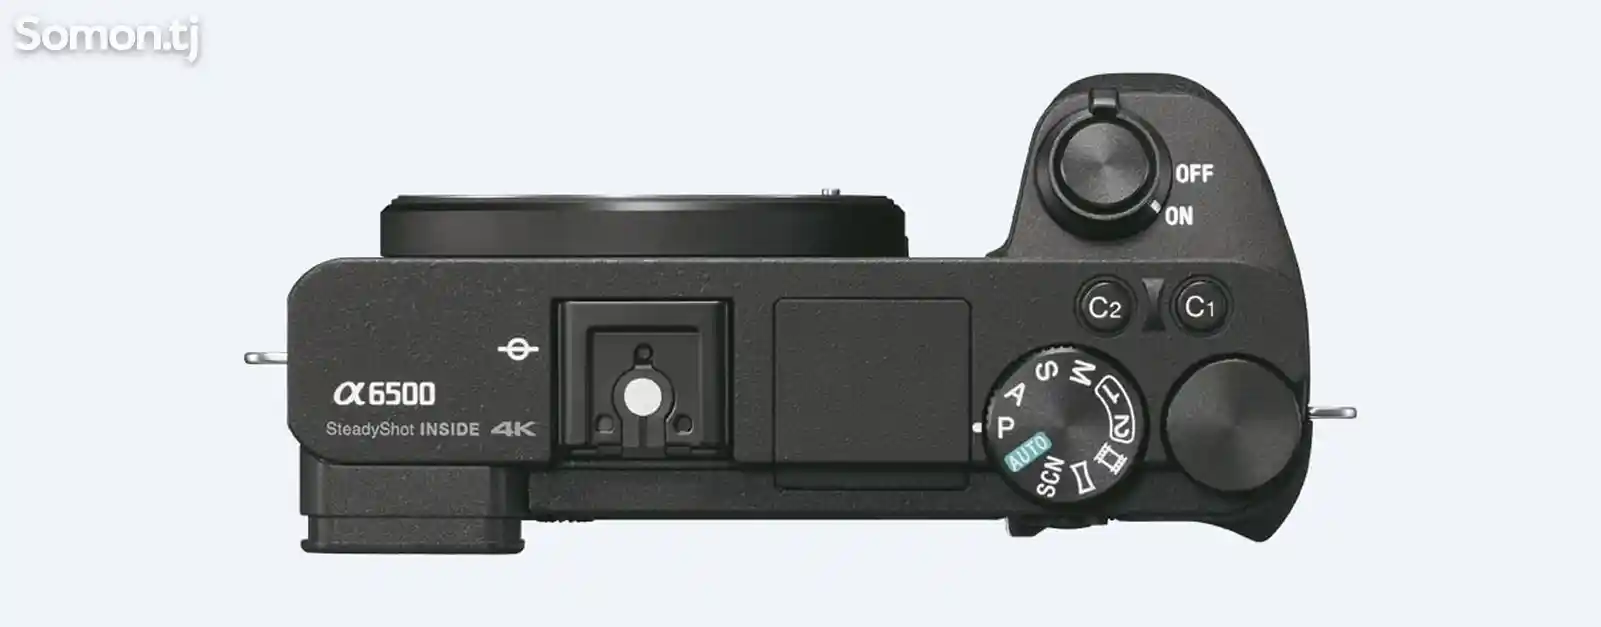 Видеокамера Sony 6500 на заказ-2